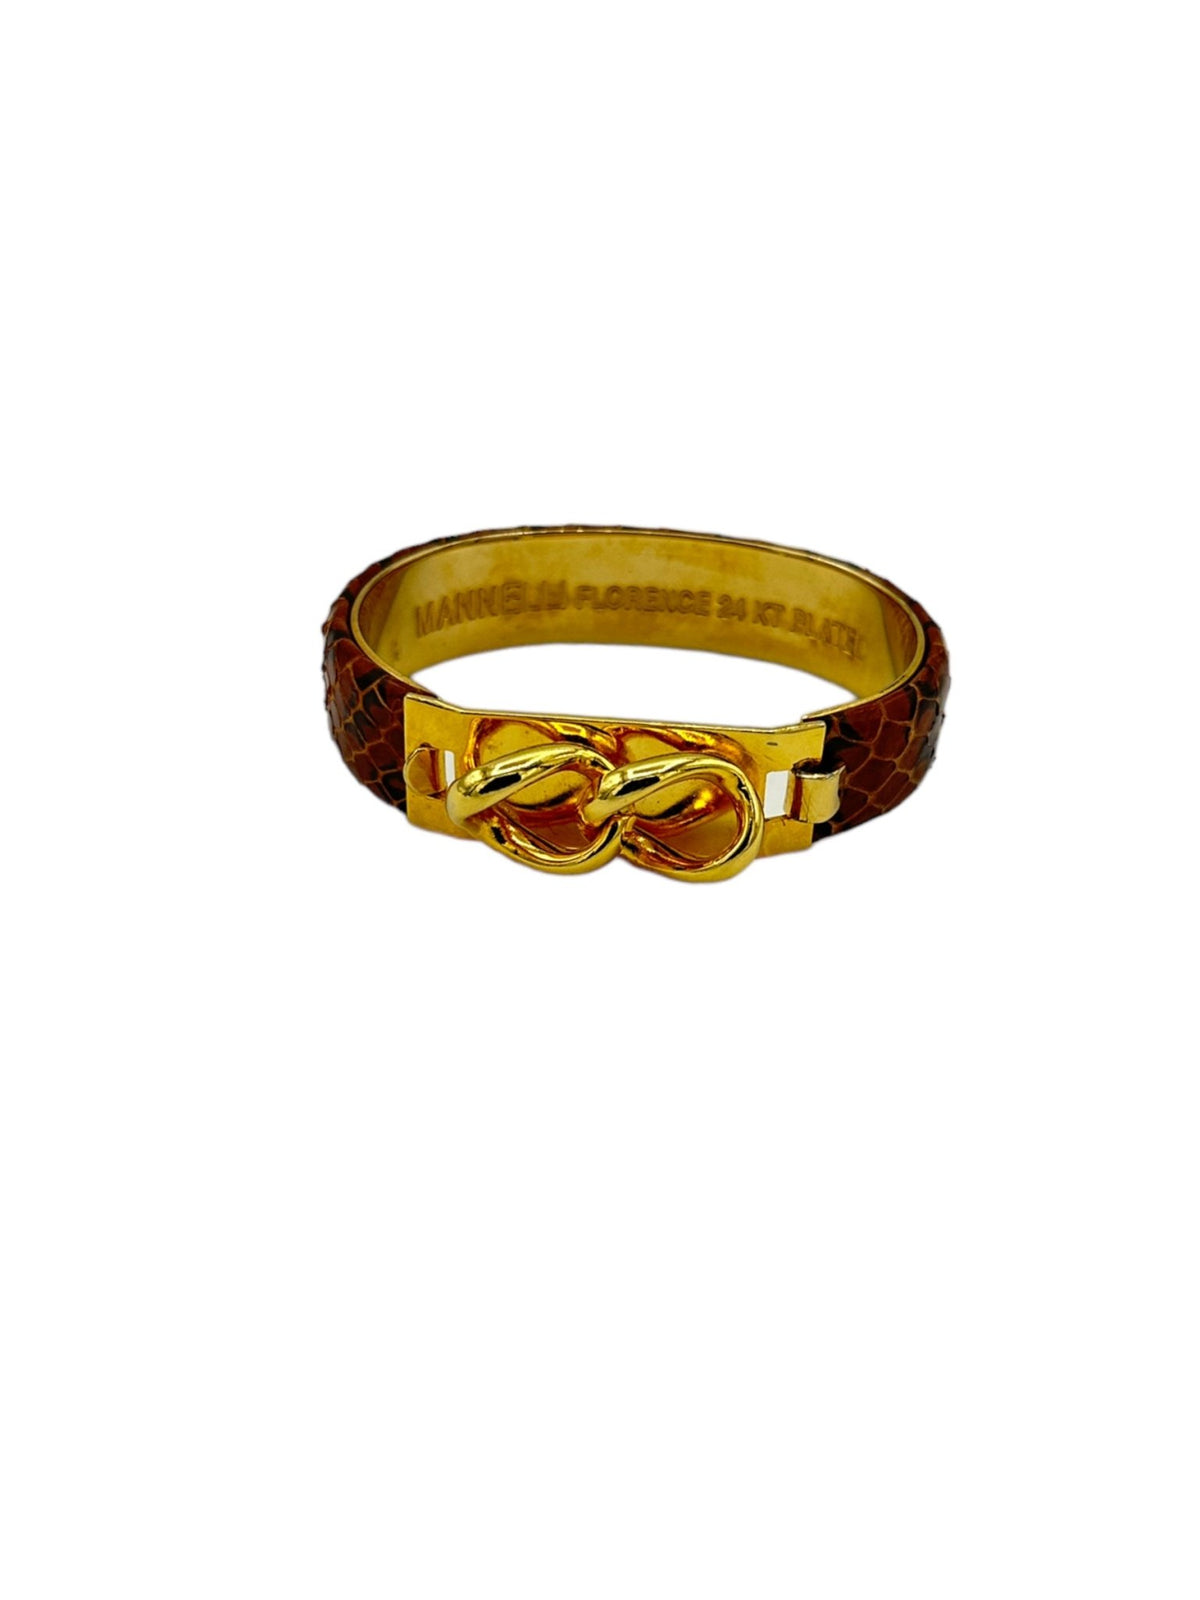 Mannelli Florence 24K Gold Plated Vintage Brown Leather Bangle Bracelet - 24 Wishes Vintage Jewelry